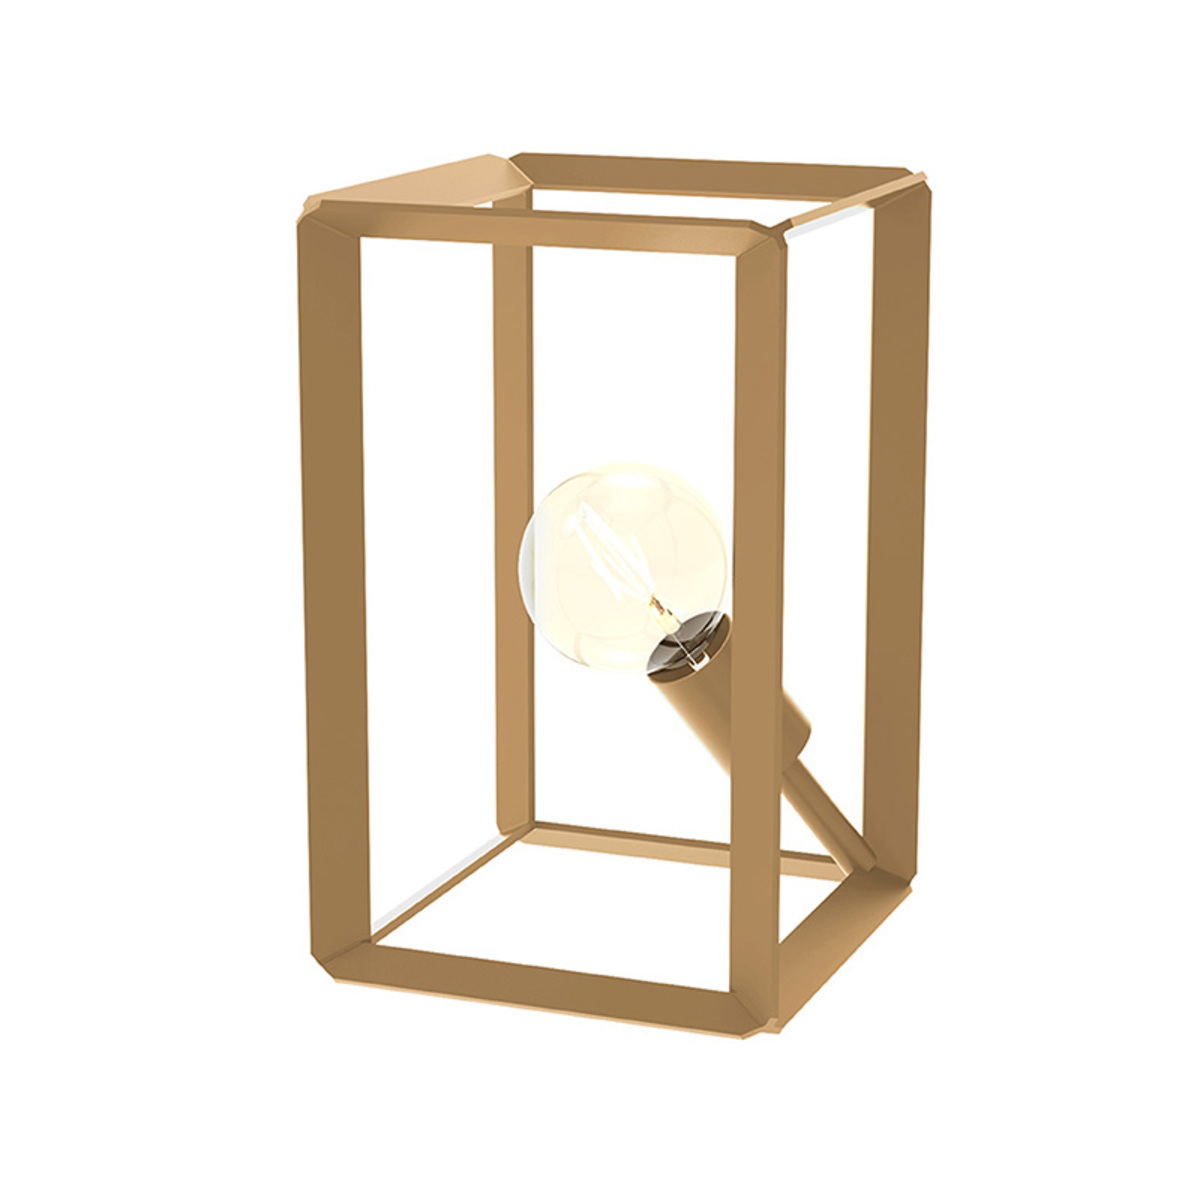  Tafellamp Tetto - Antiek goud - Metaal afbeelding 1